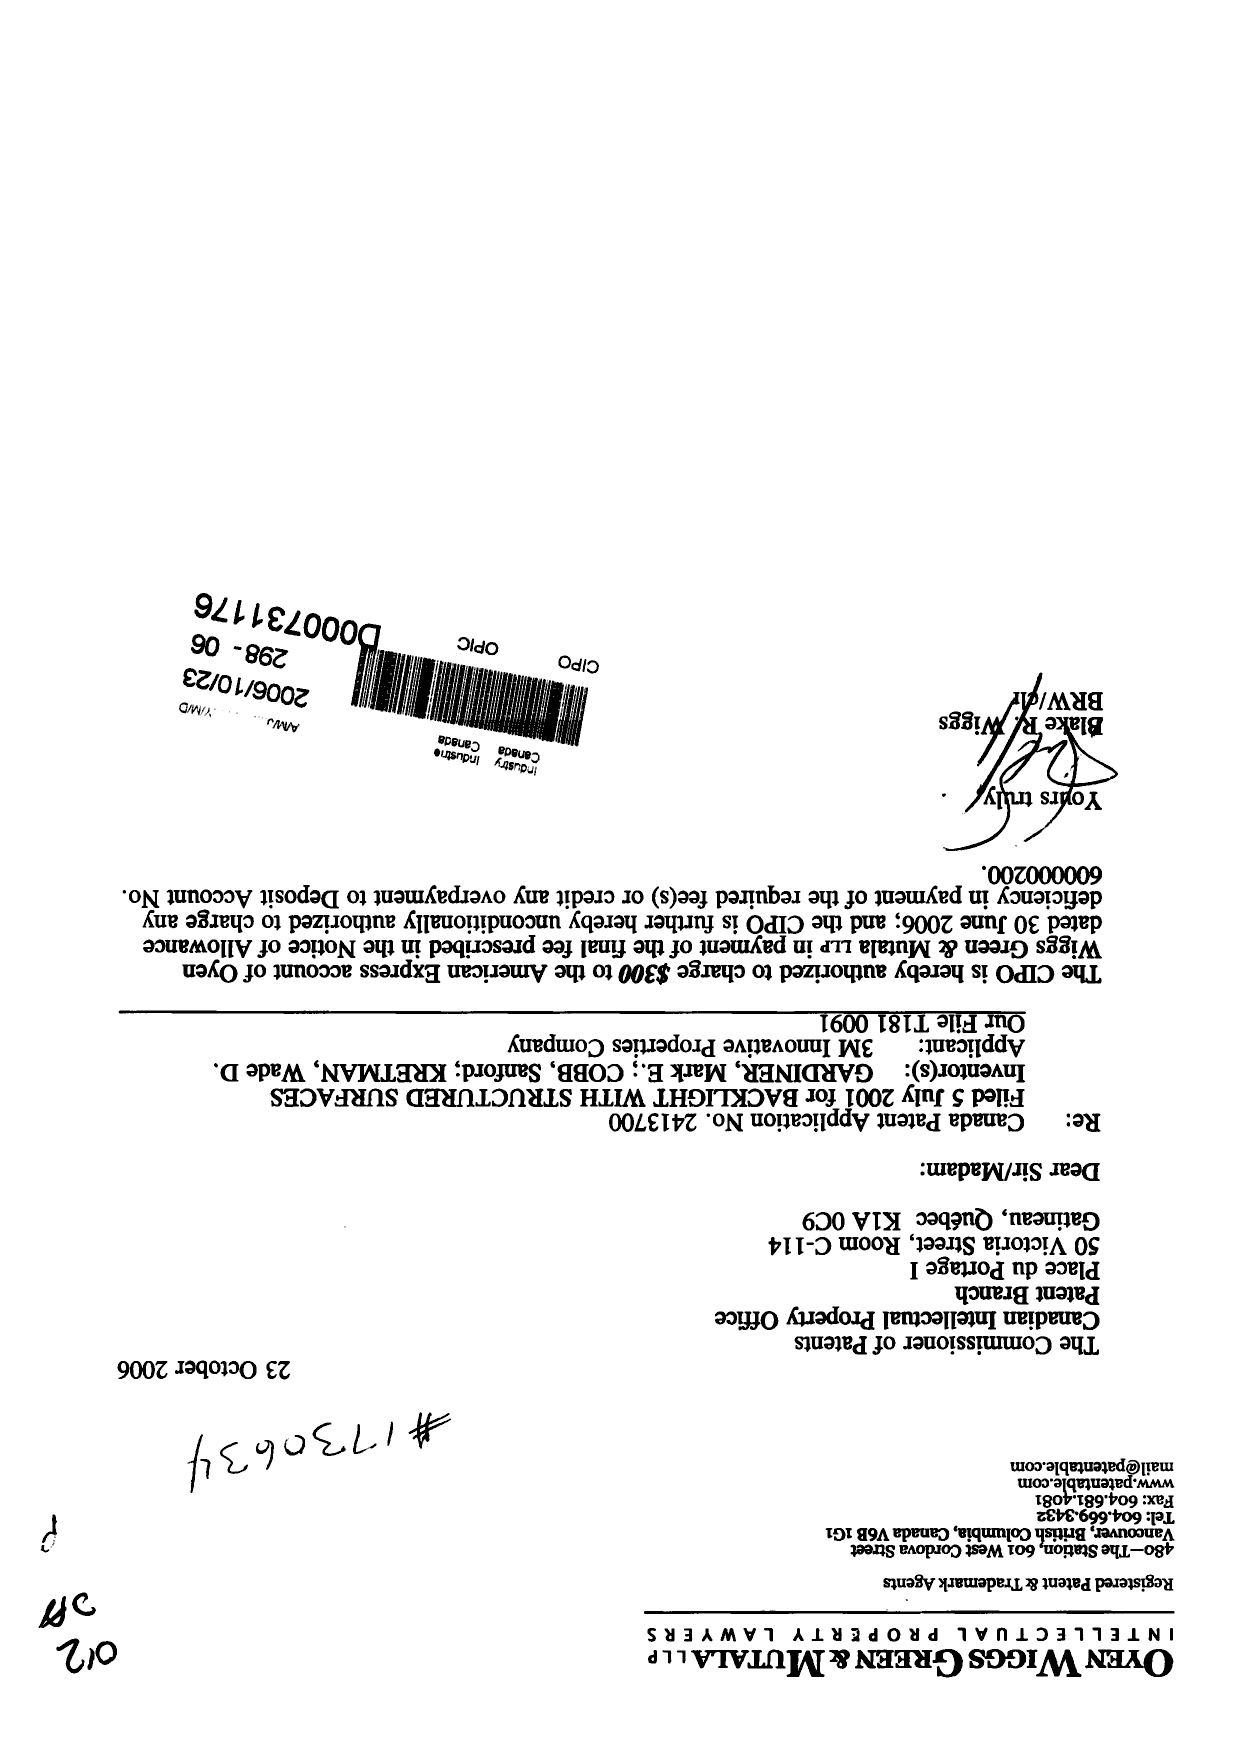 Canadian Patent Document 2413700. Correspondence 20061023. Image 1 of 1